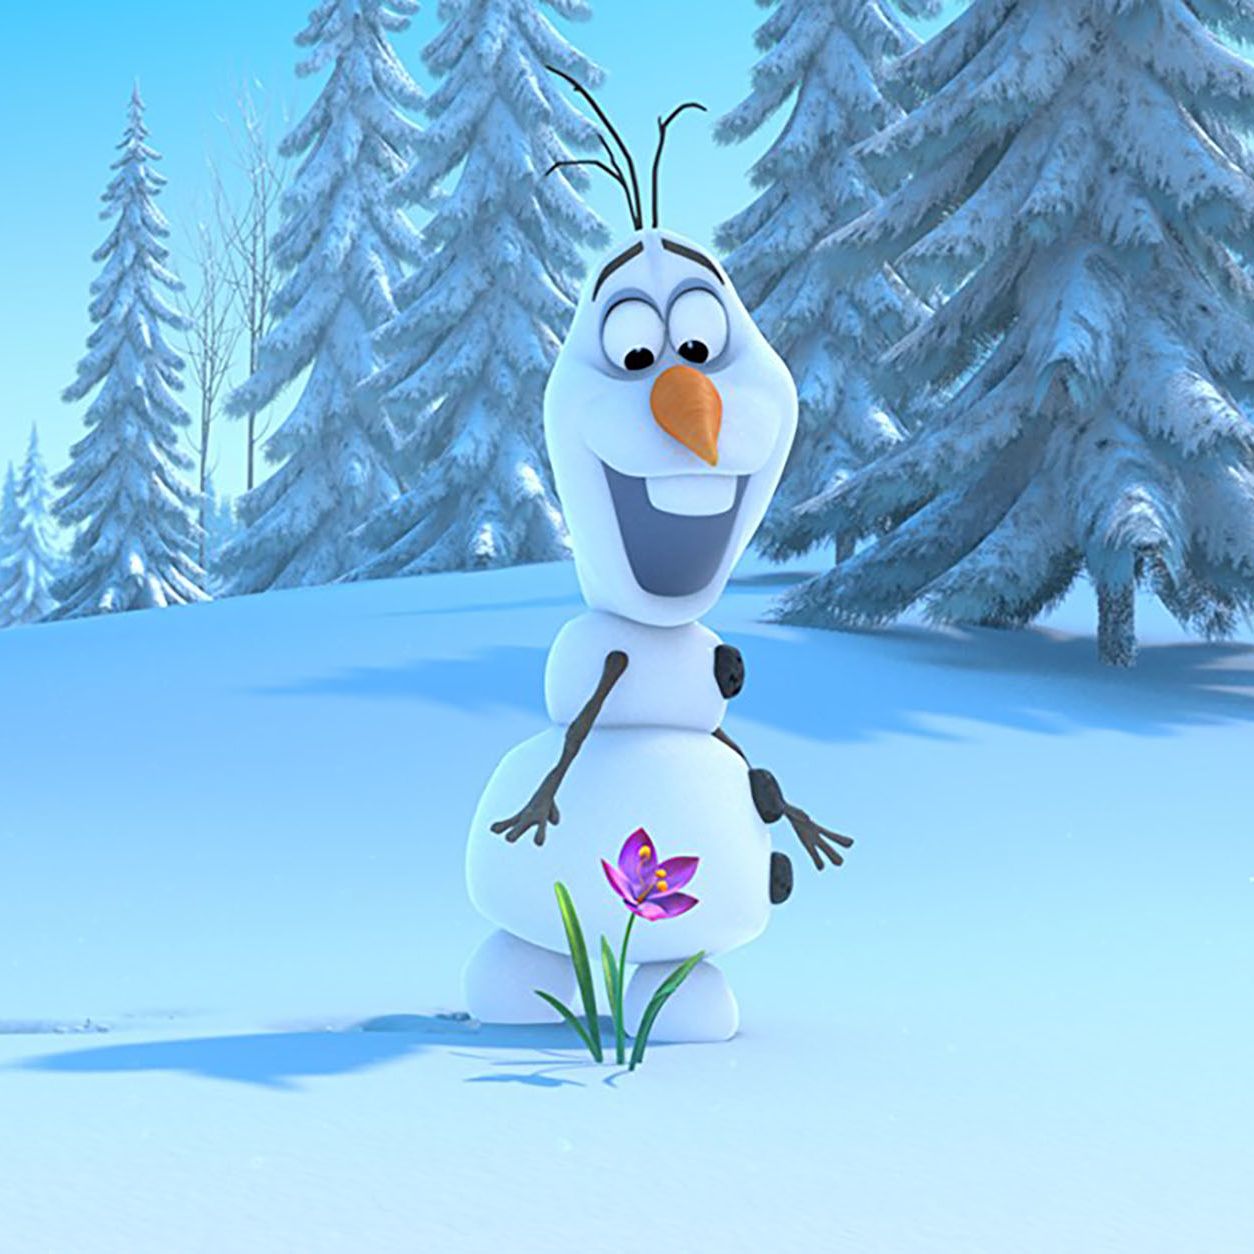 Frozen' short ending its run with 'Coco' | CNN